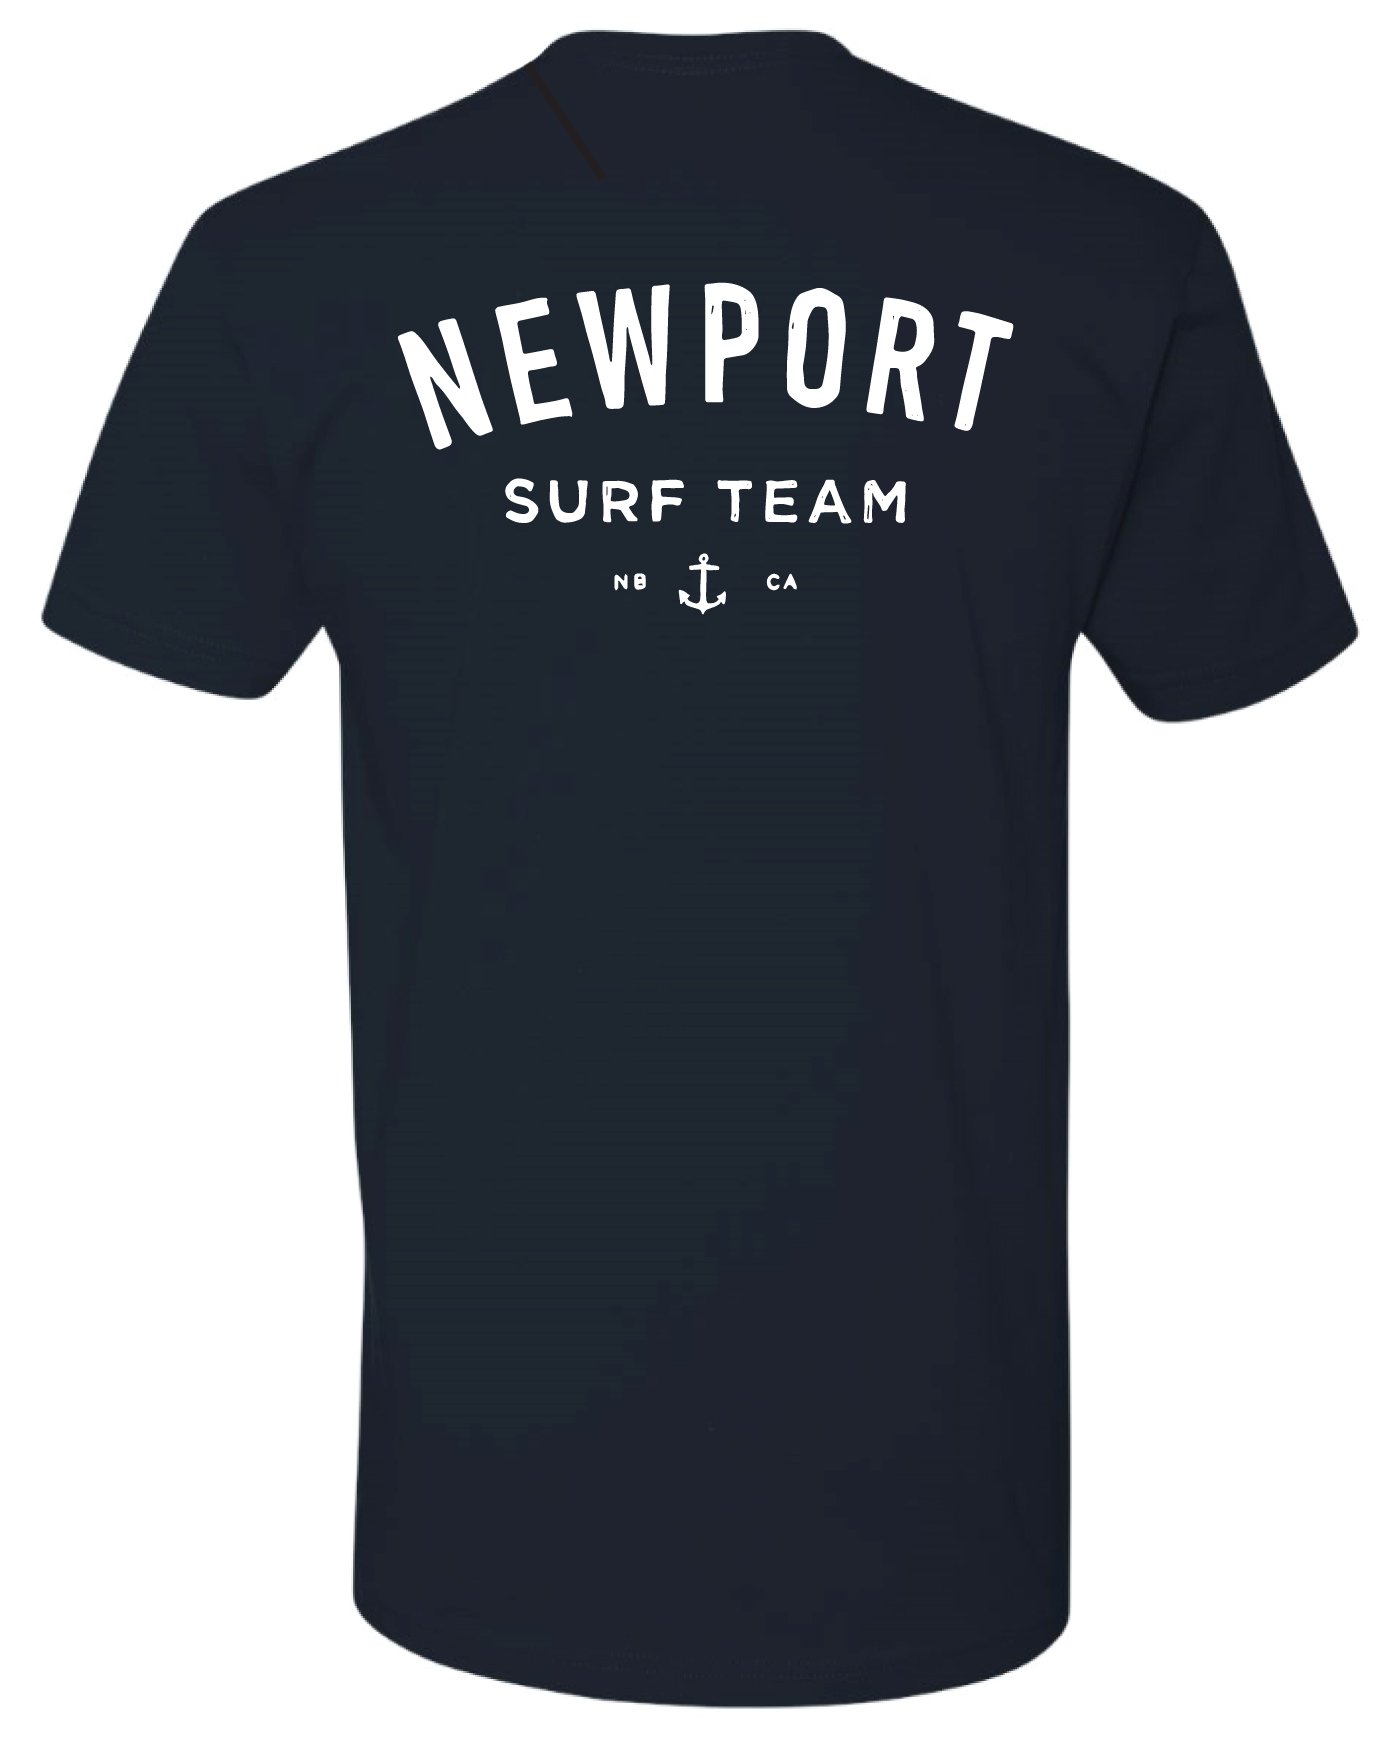 NHHS Surf Navy Shirts.jpg